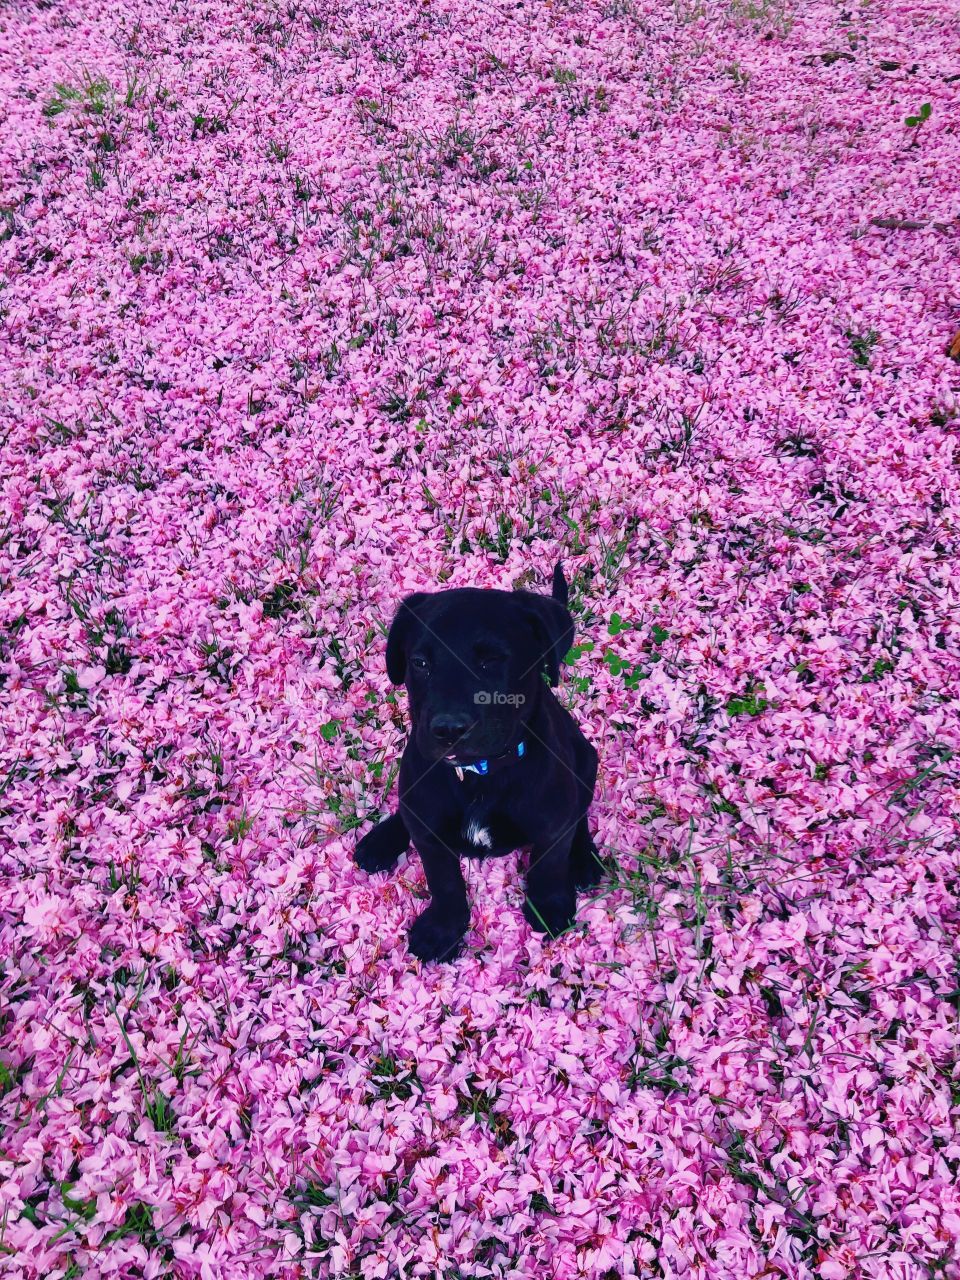 Flower pup